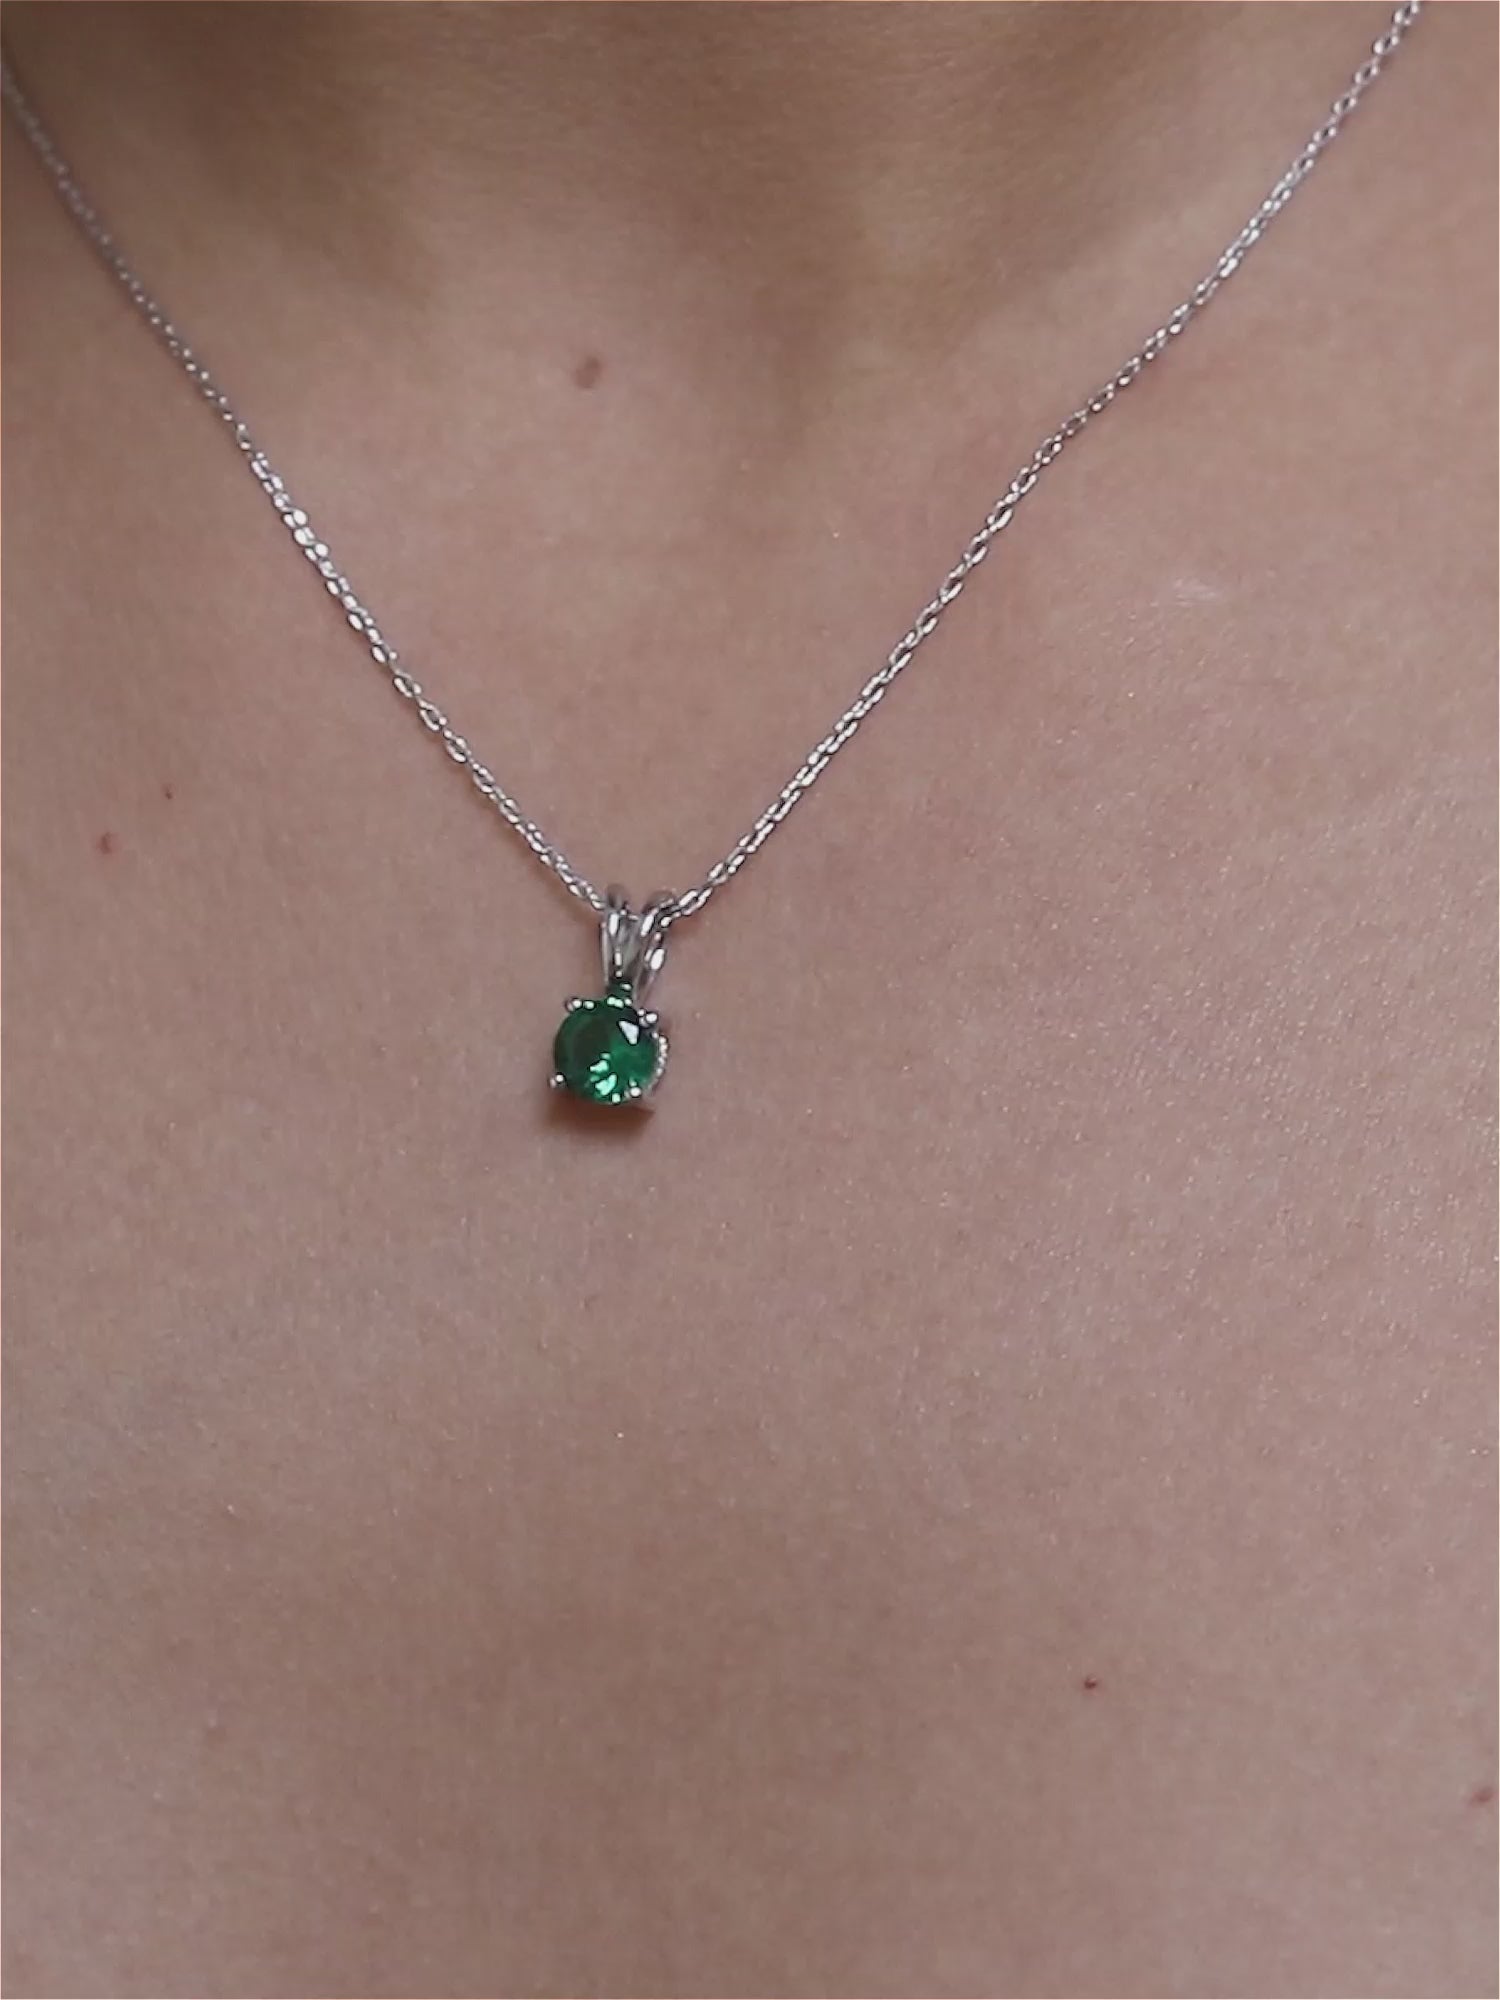 Buy Emerald pendant necklace, Tear drop pendant, Green silver pendant  online at aStudio1980.com